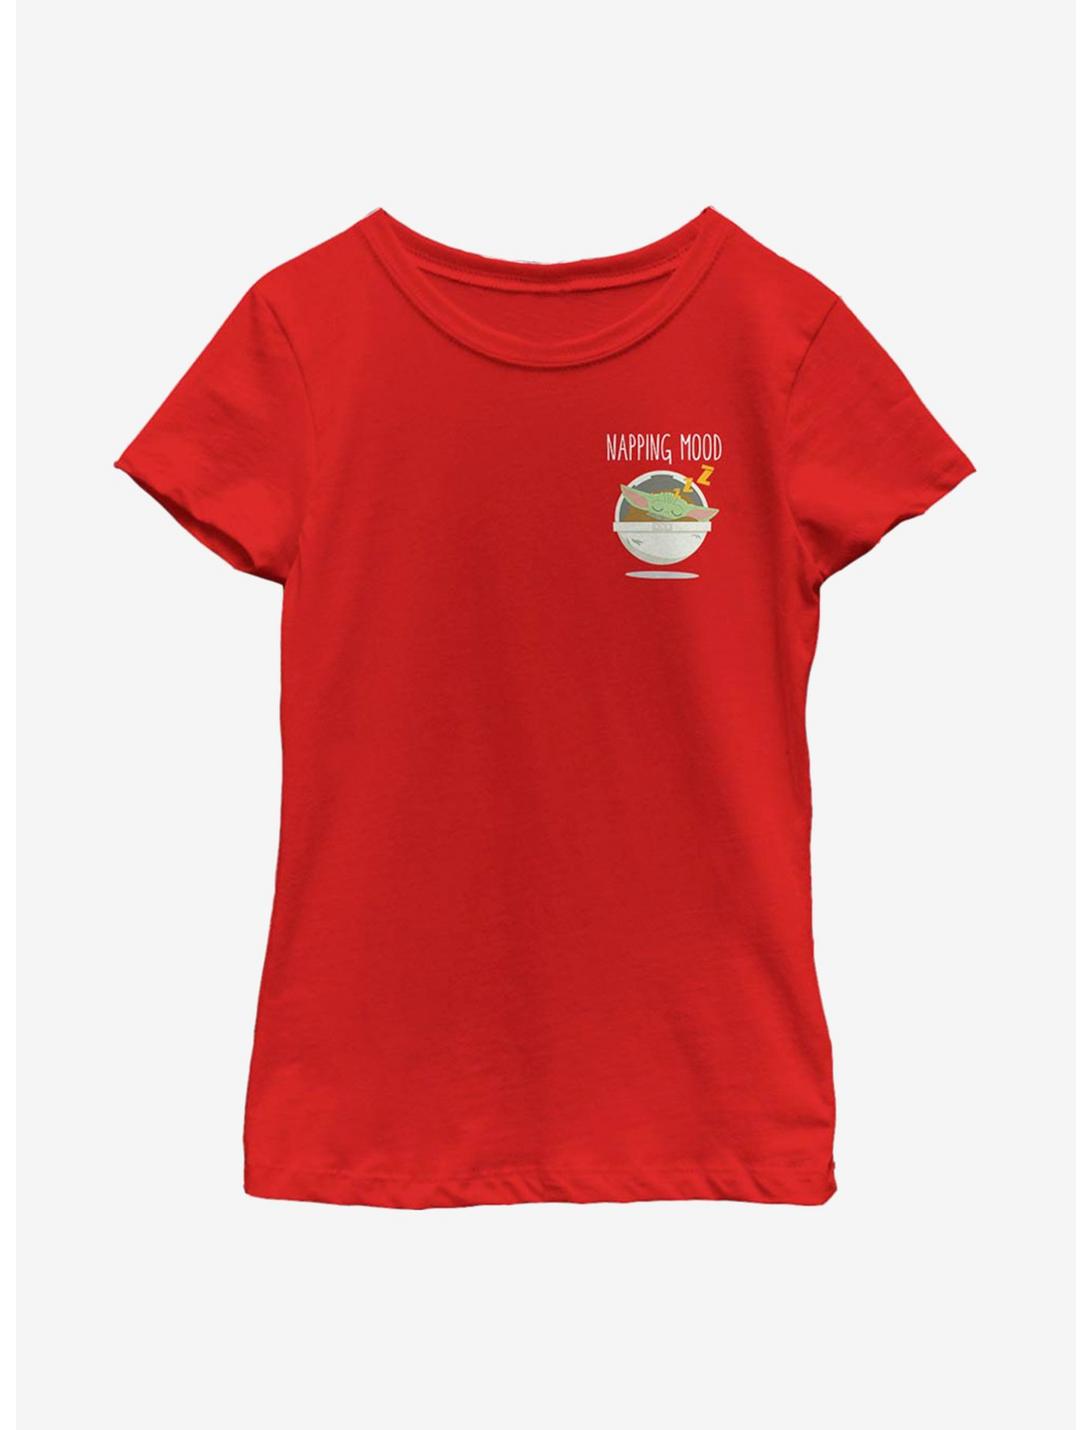 Star Wars The Mandalorian The Child Pocket Nap Youth Girls T-Shirt, RED, hi-res